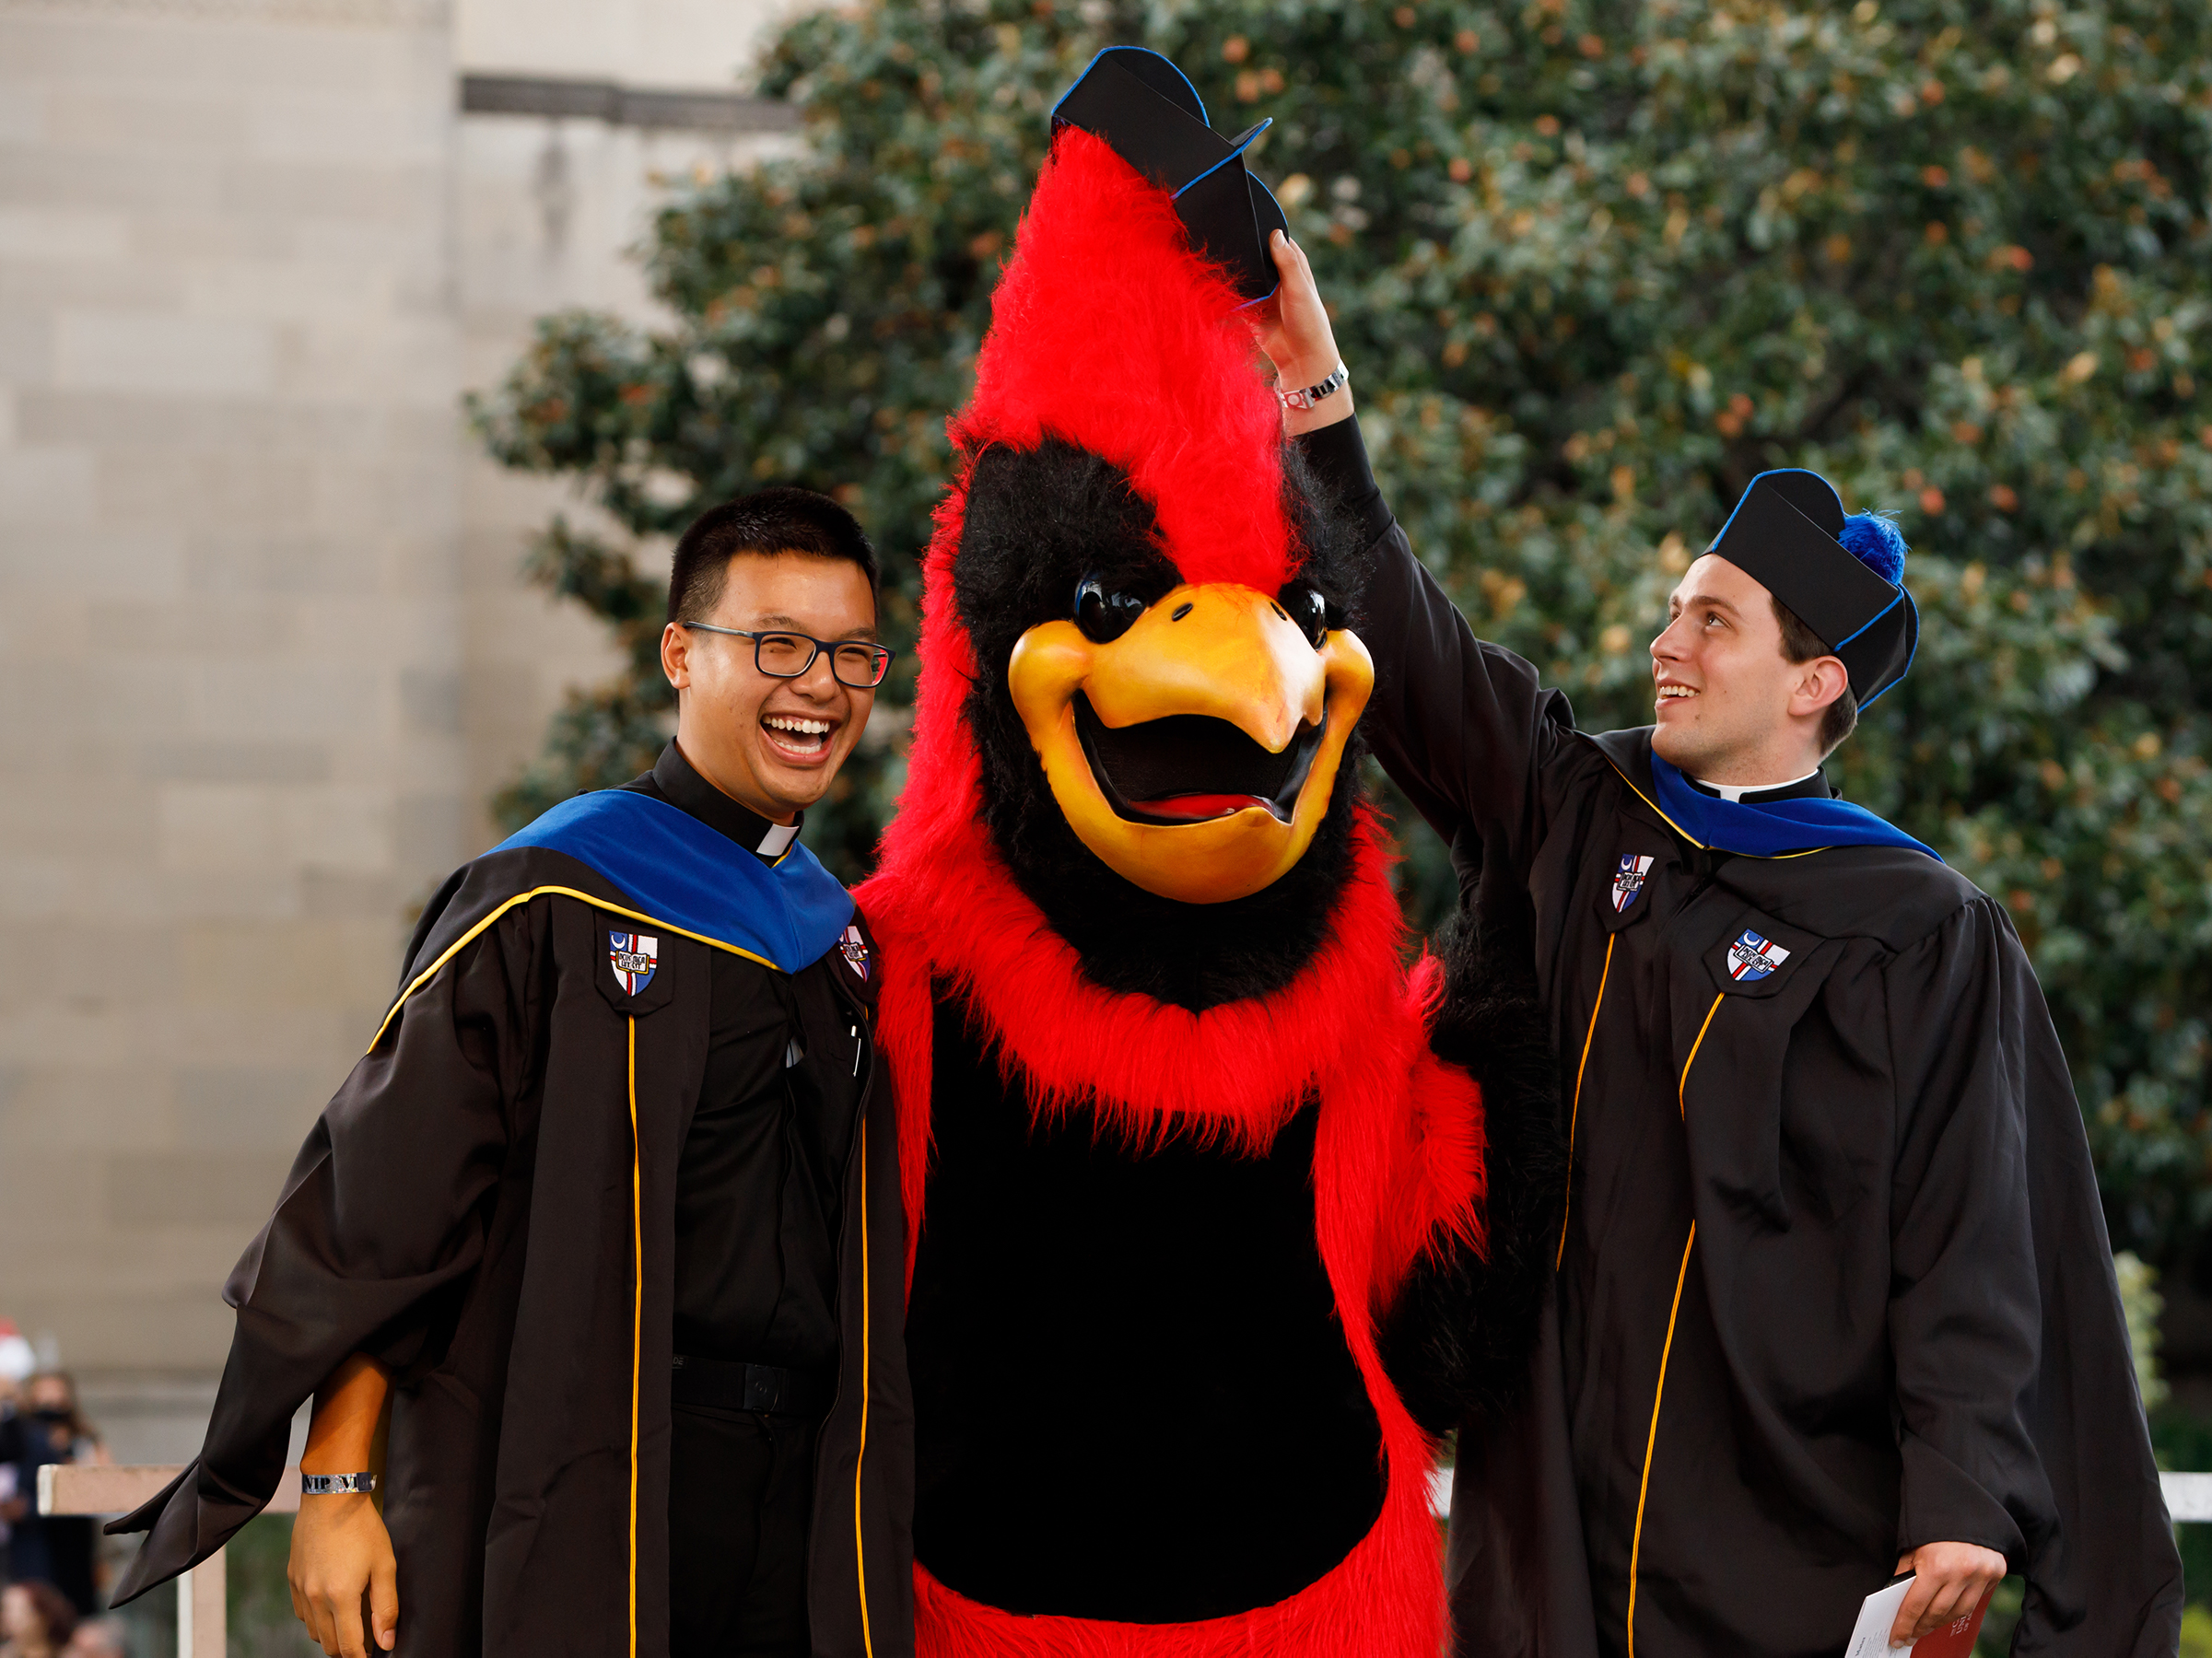 Graduates in regalia smile and put a graduate hat on Red, the mascot